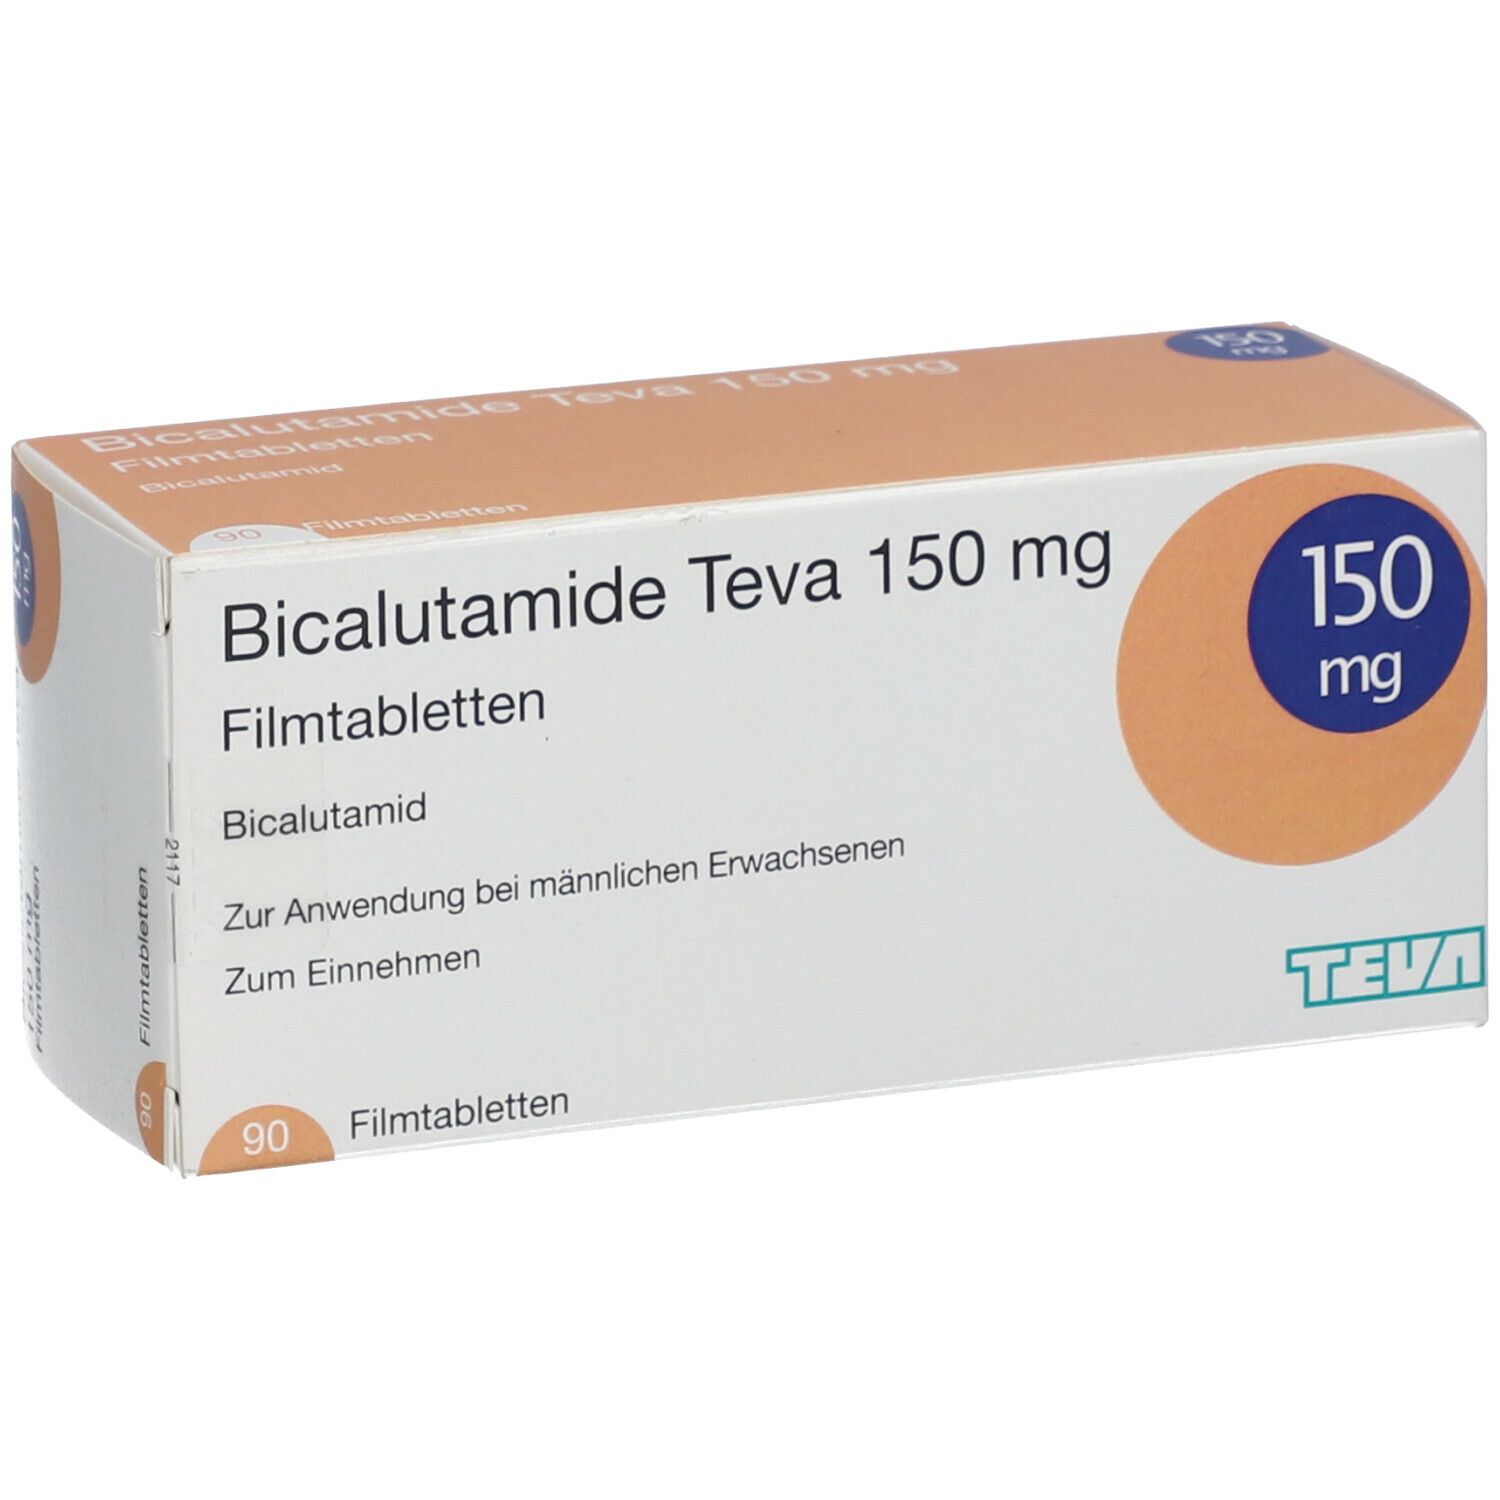 Bicalutamide Teva 150 mg